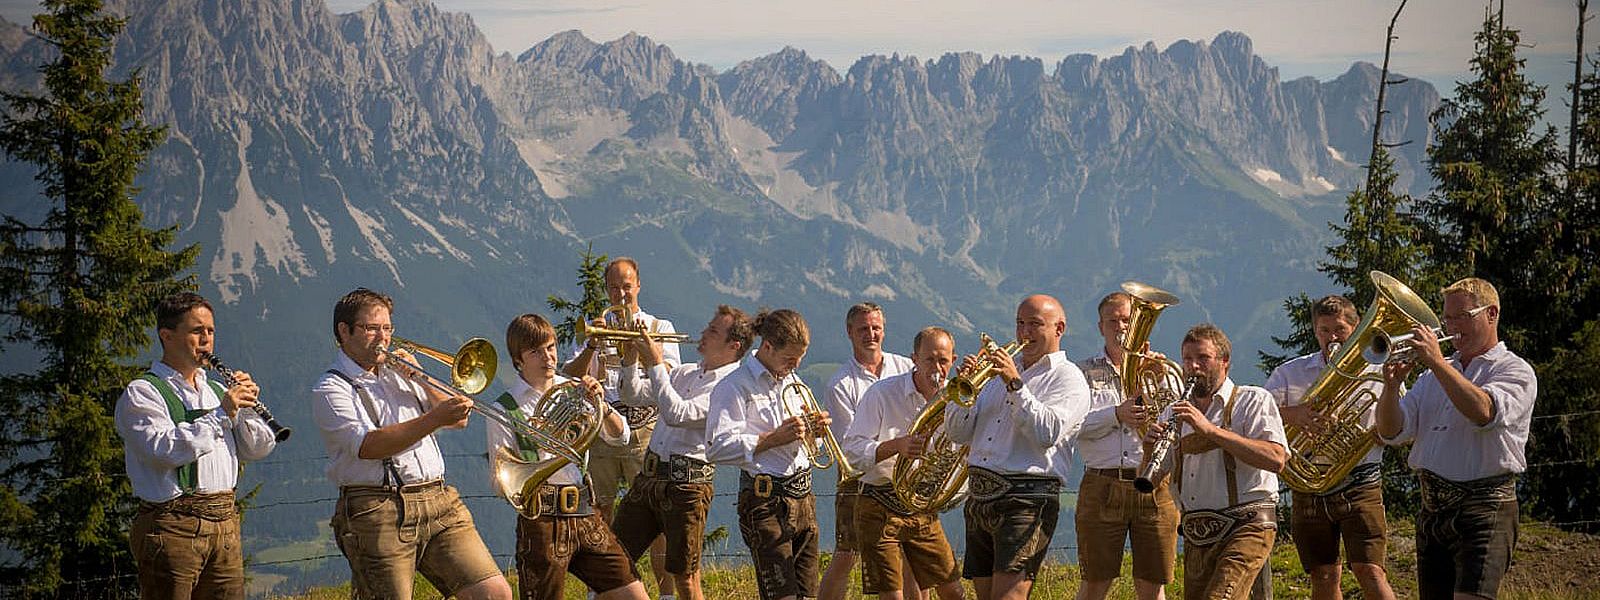 Music autumn the Alpine music festival